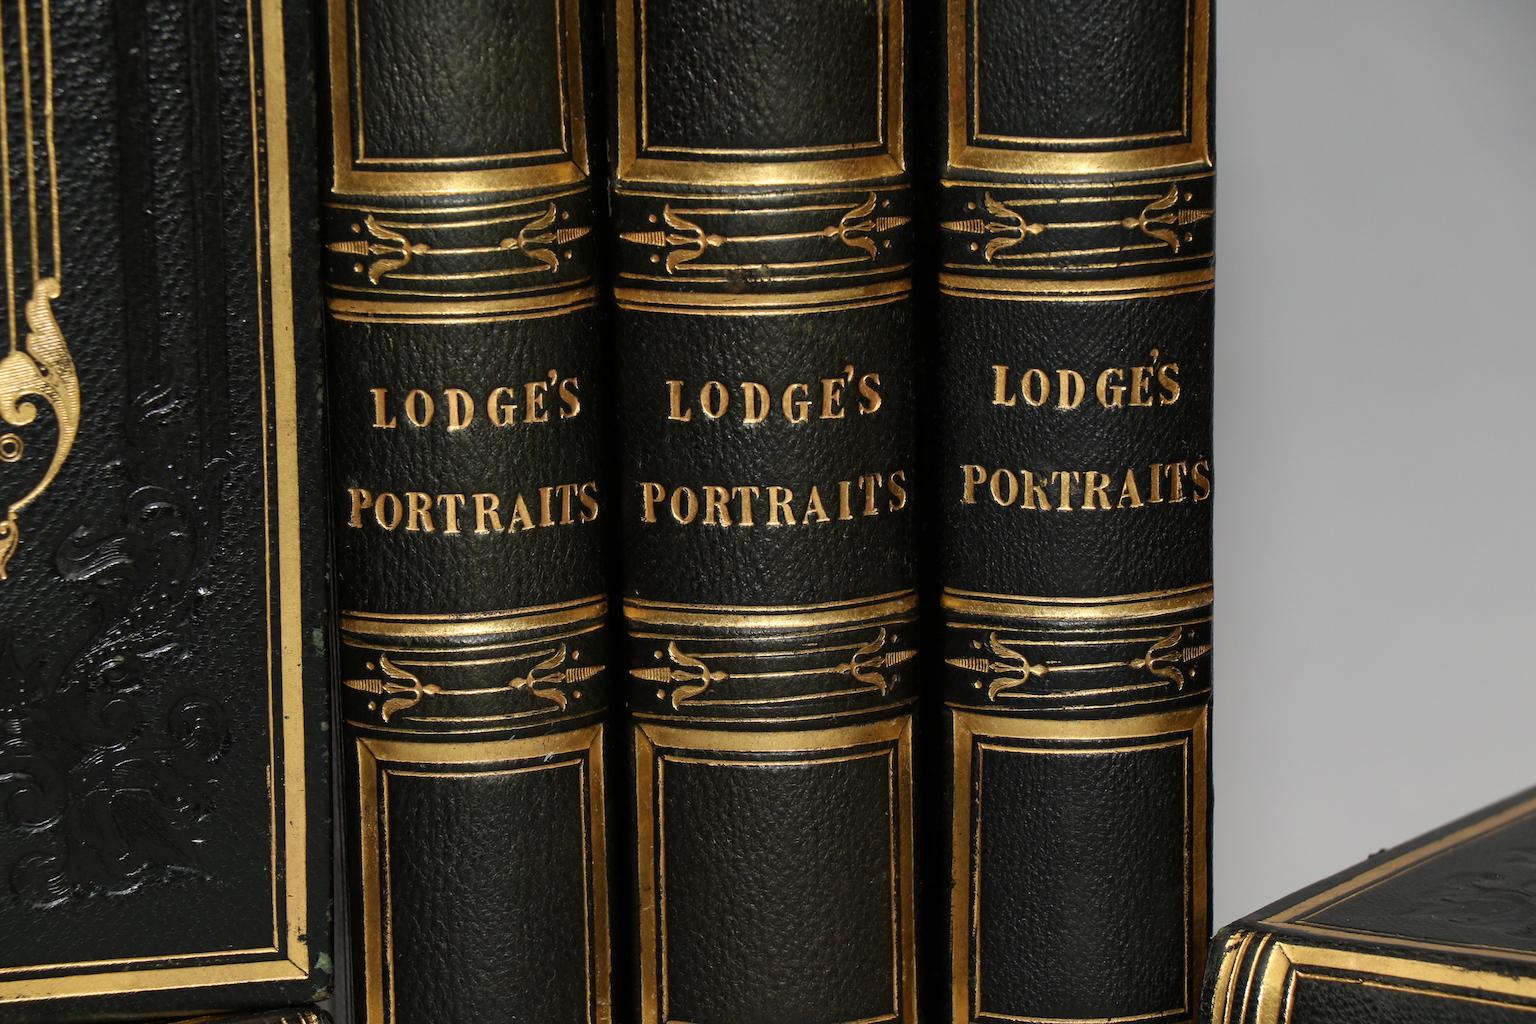 Books, Edmund Lodge's 